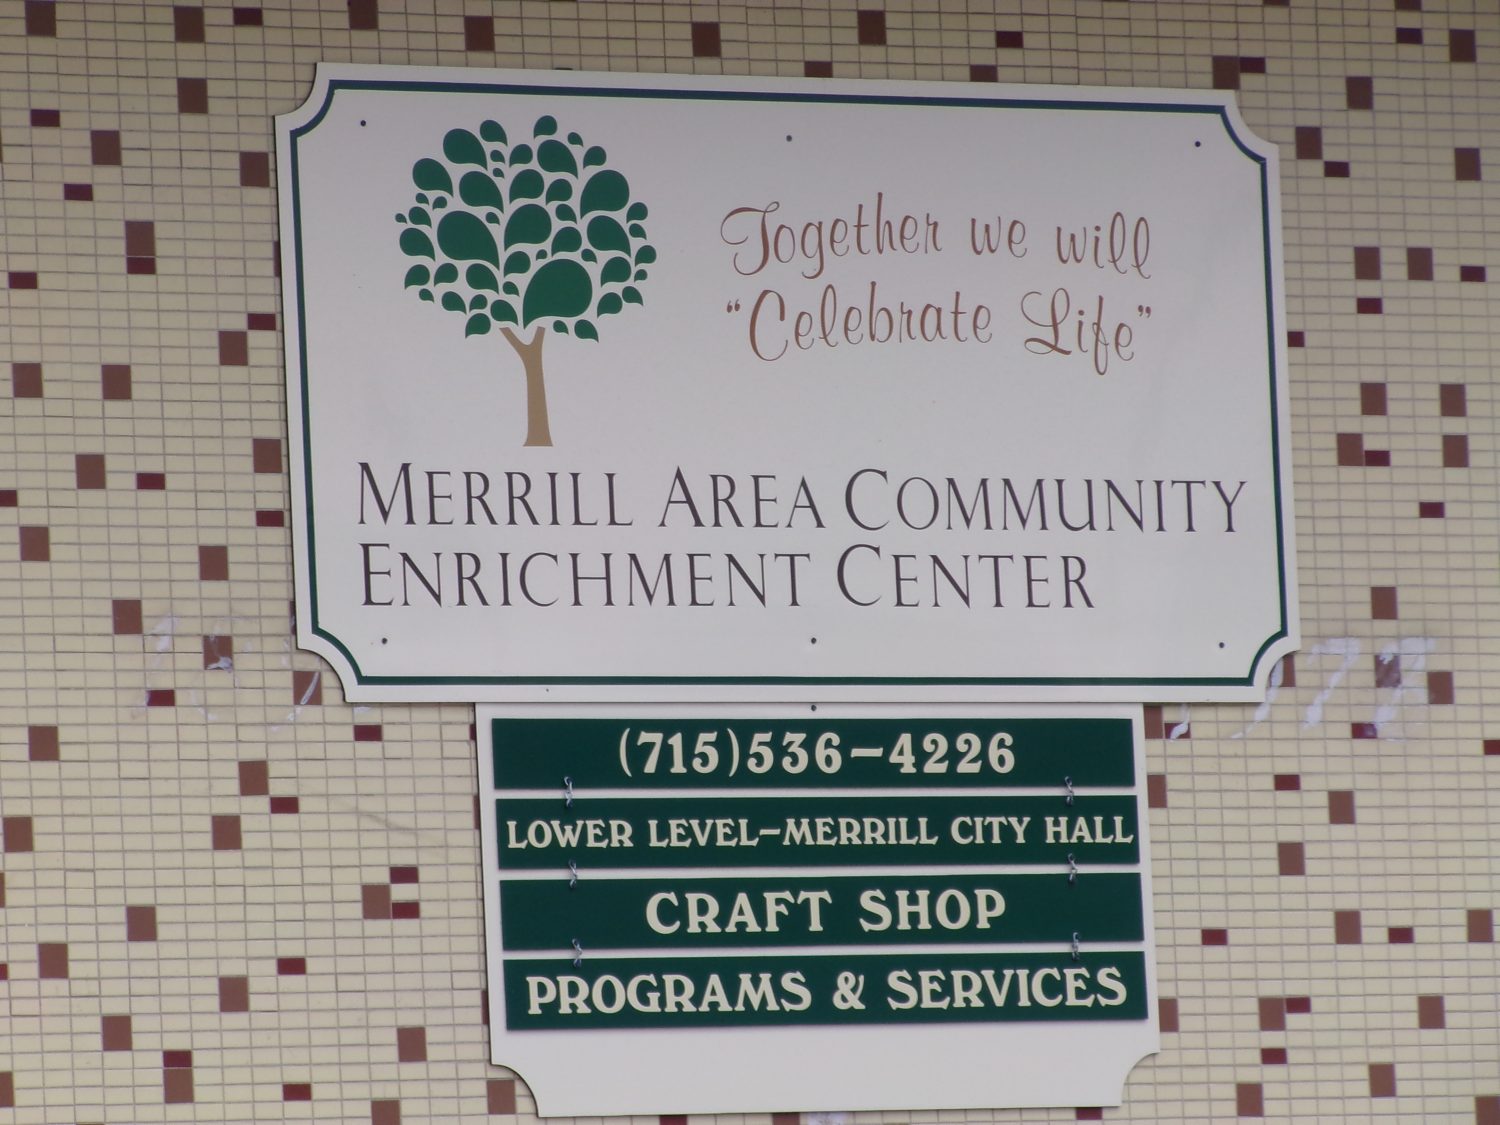 Enrichment Center seeks new home